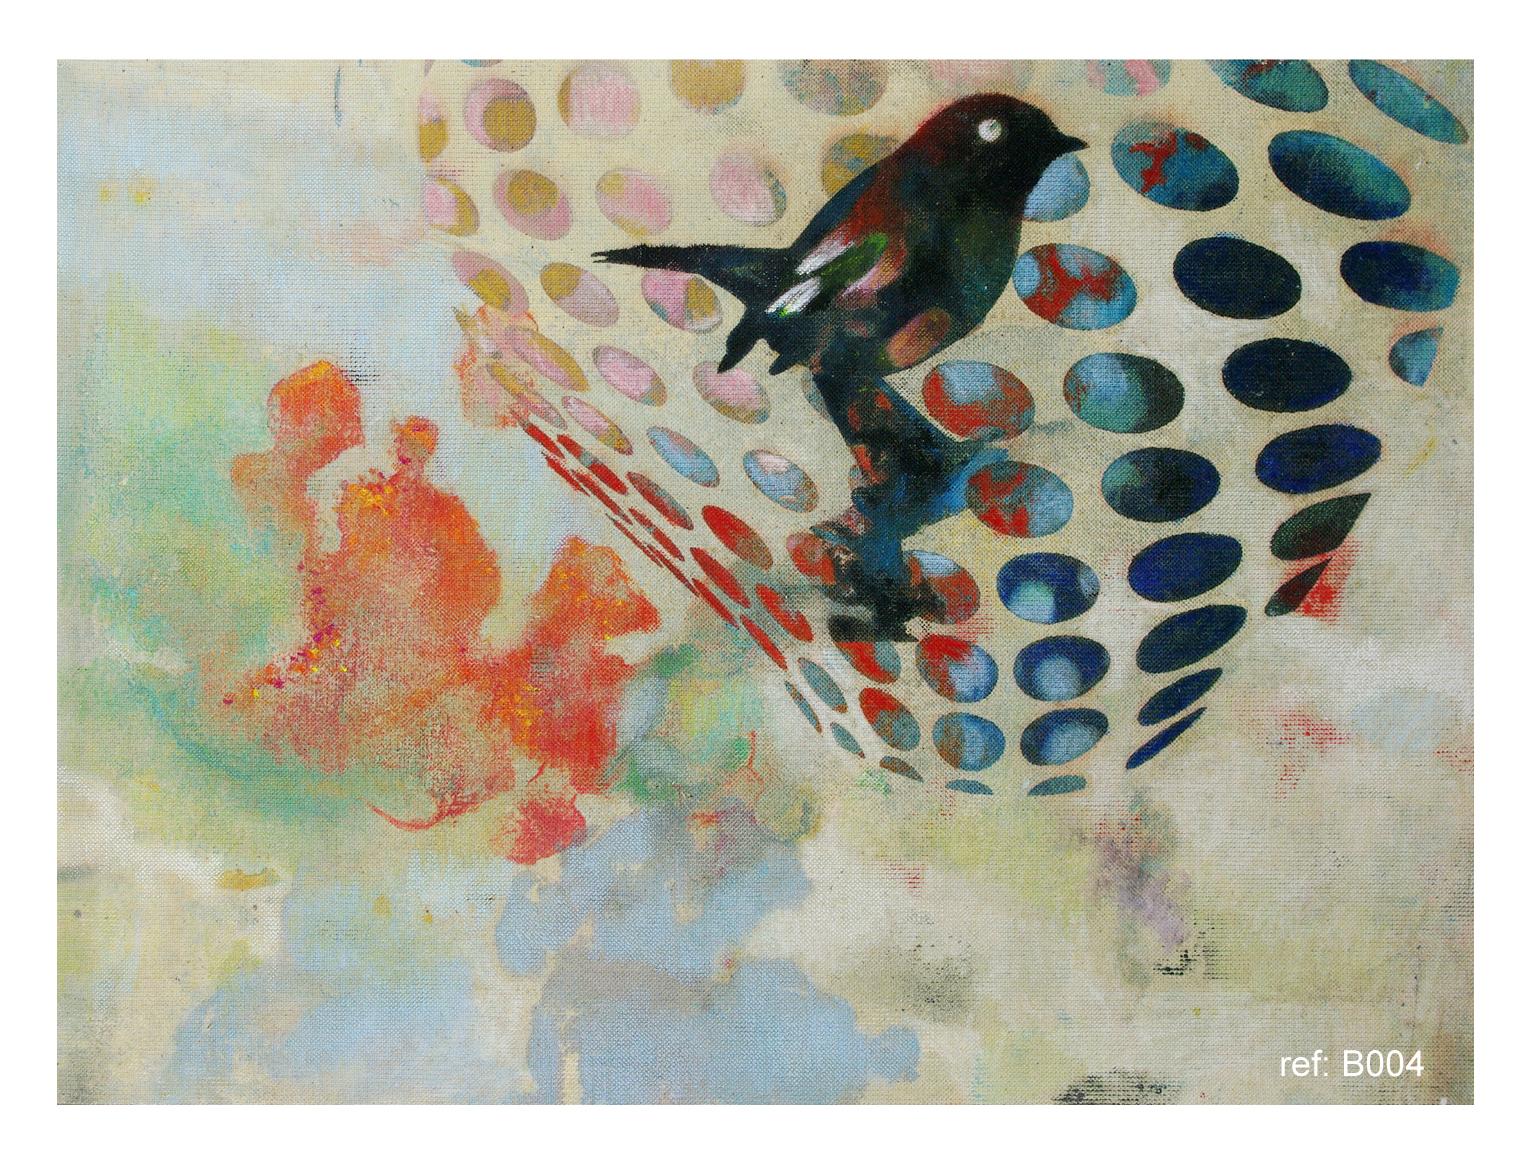 Birds 019- Contemporary, Abstract, Expressionist, Modern, Street art, Surrealist - Mixed Media Art by Francisco Nicolás